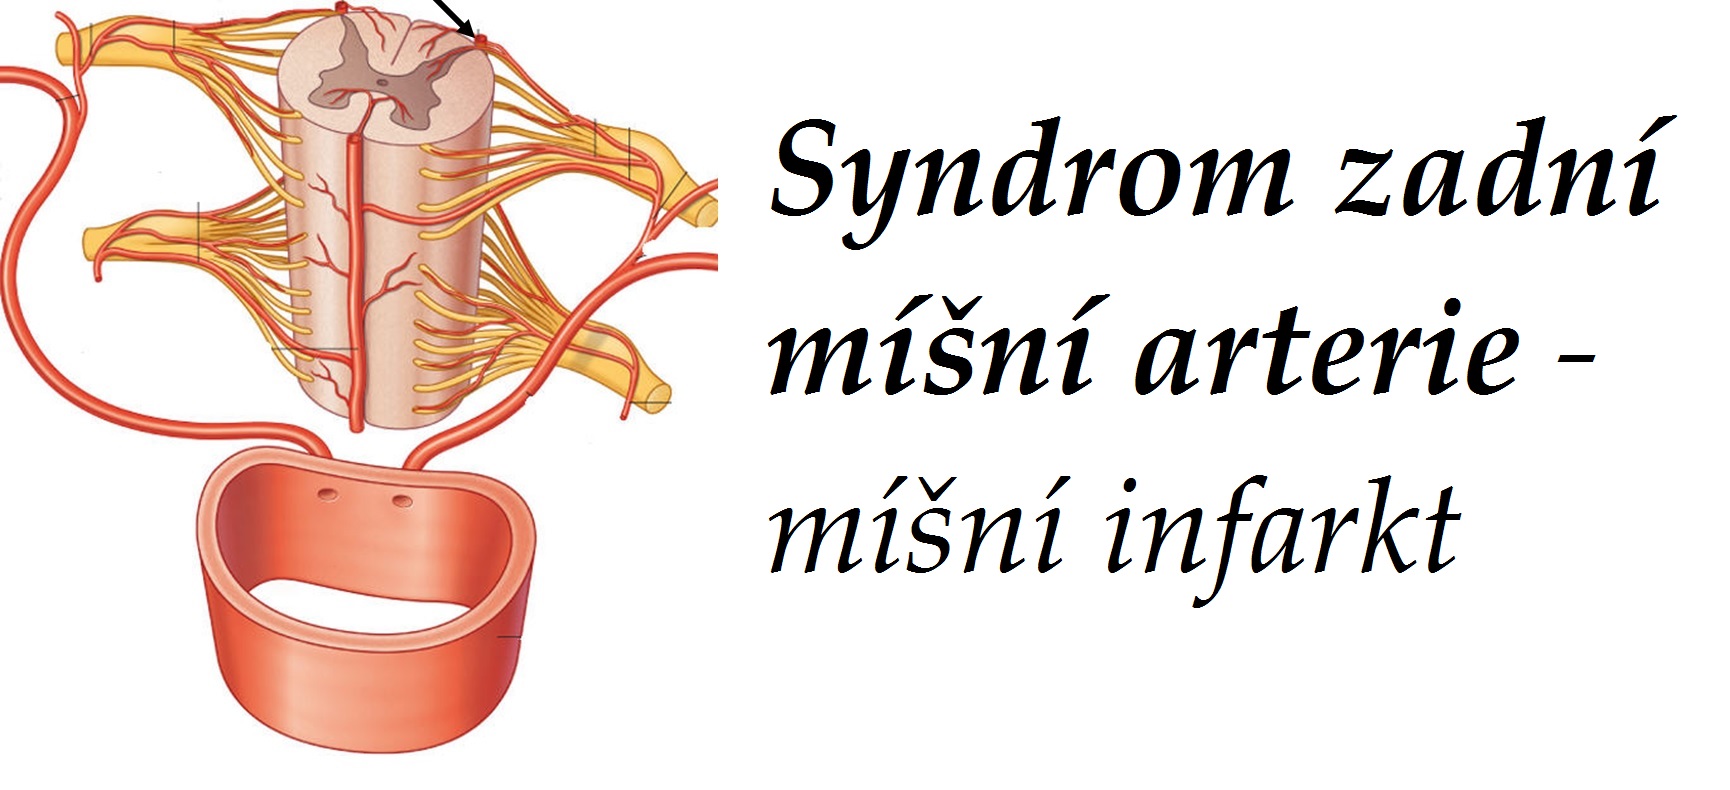 syndrom-zadni-misni-arterie-priznaky-projevy-symptomy